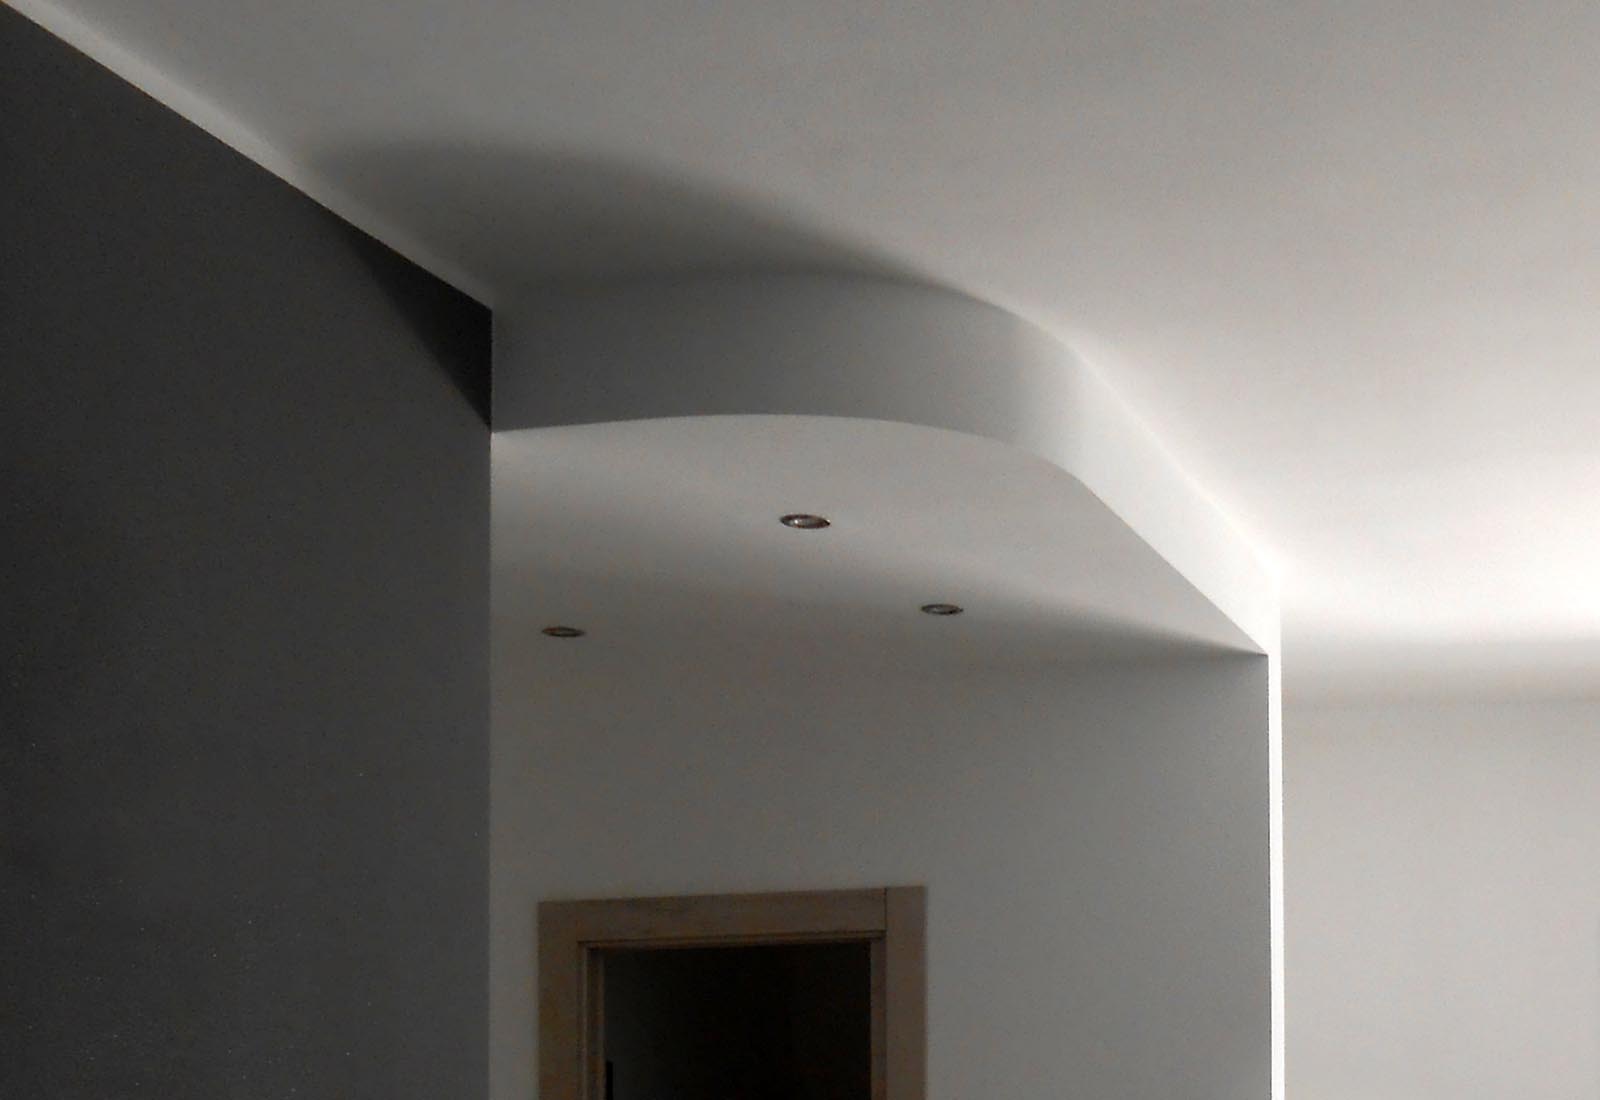 Apartment renovation in Cornaredo - Detail of interior spaces